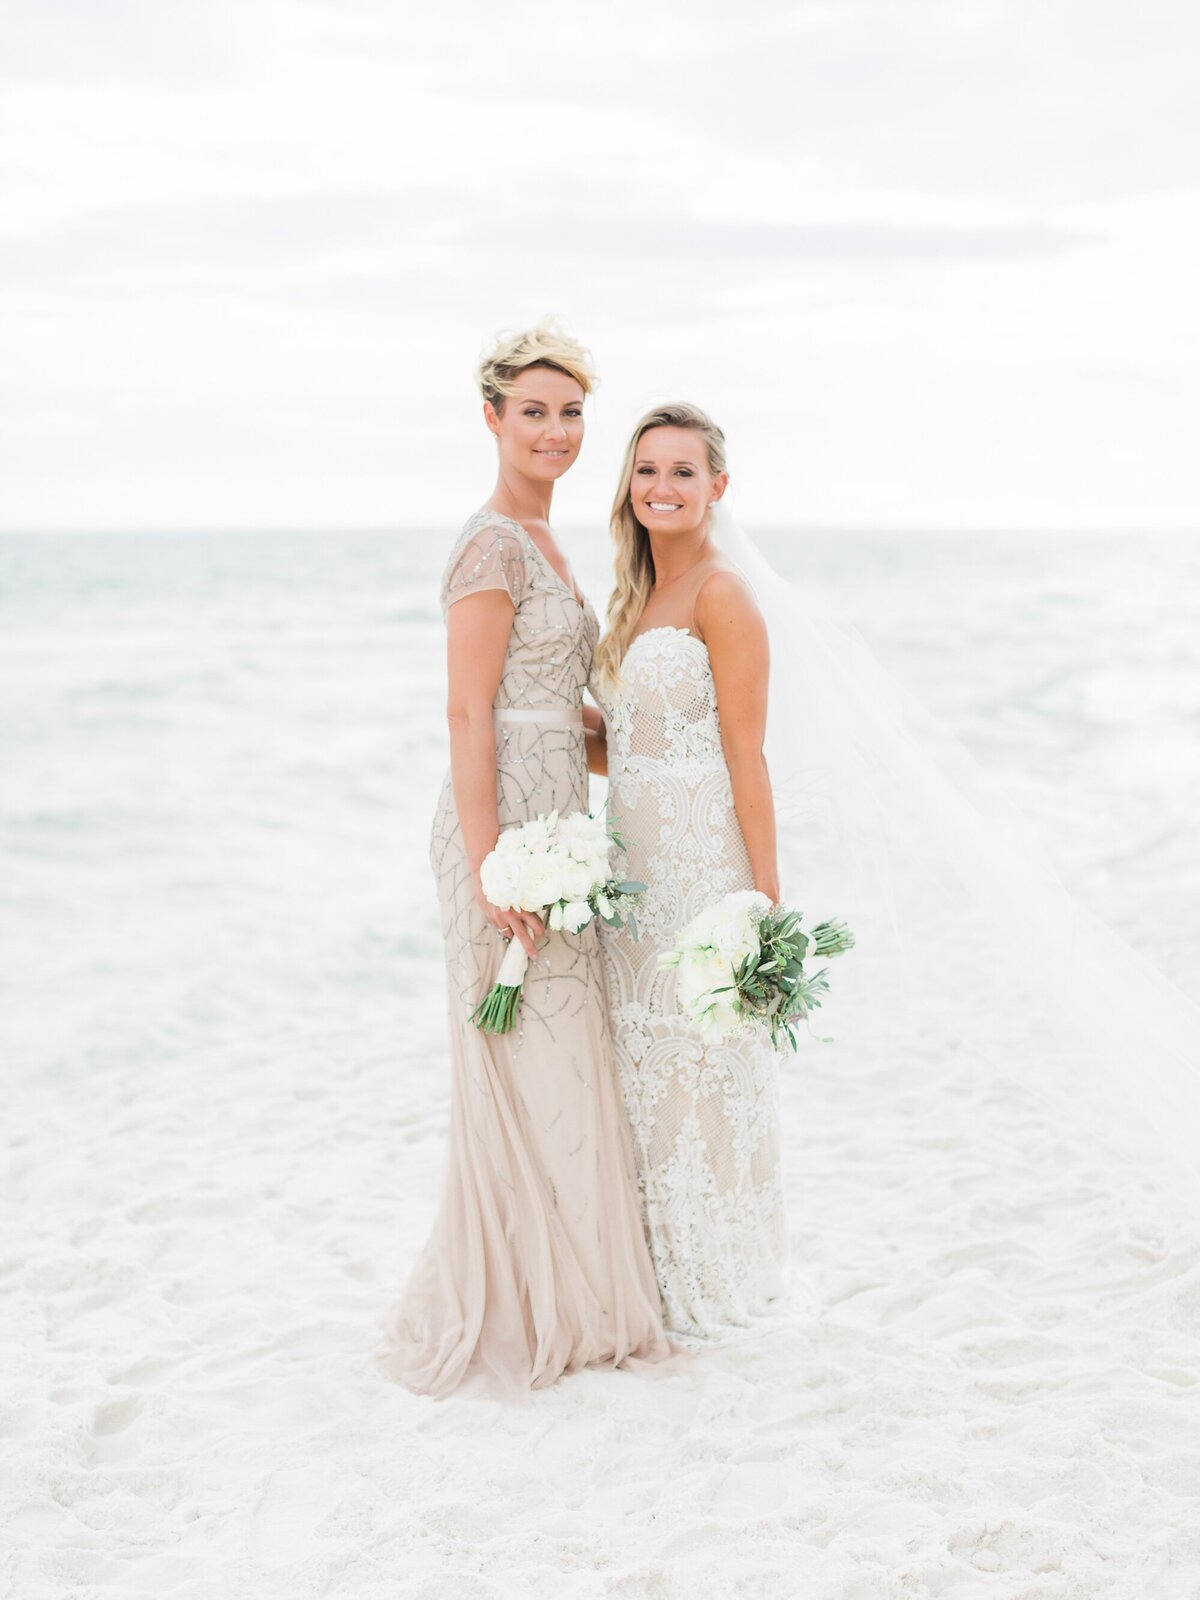 JessieBarksdalePhotography_Alys-and-Rosemary-Beach-Wedding-Photographer_027